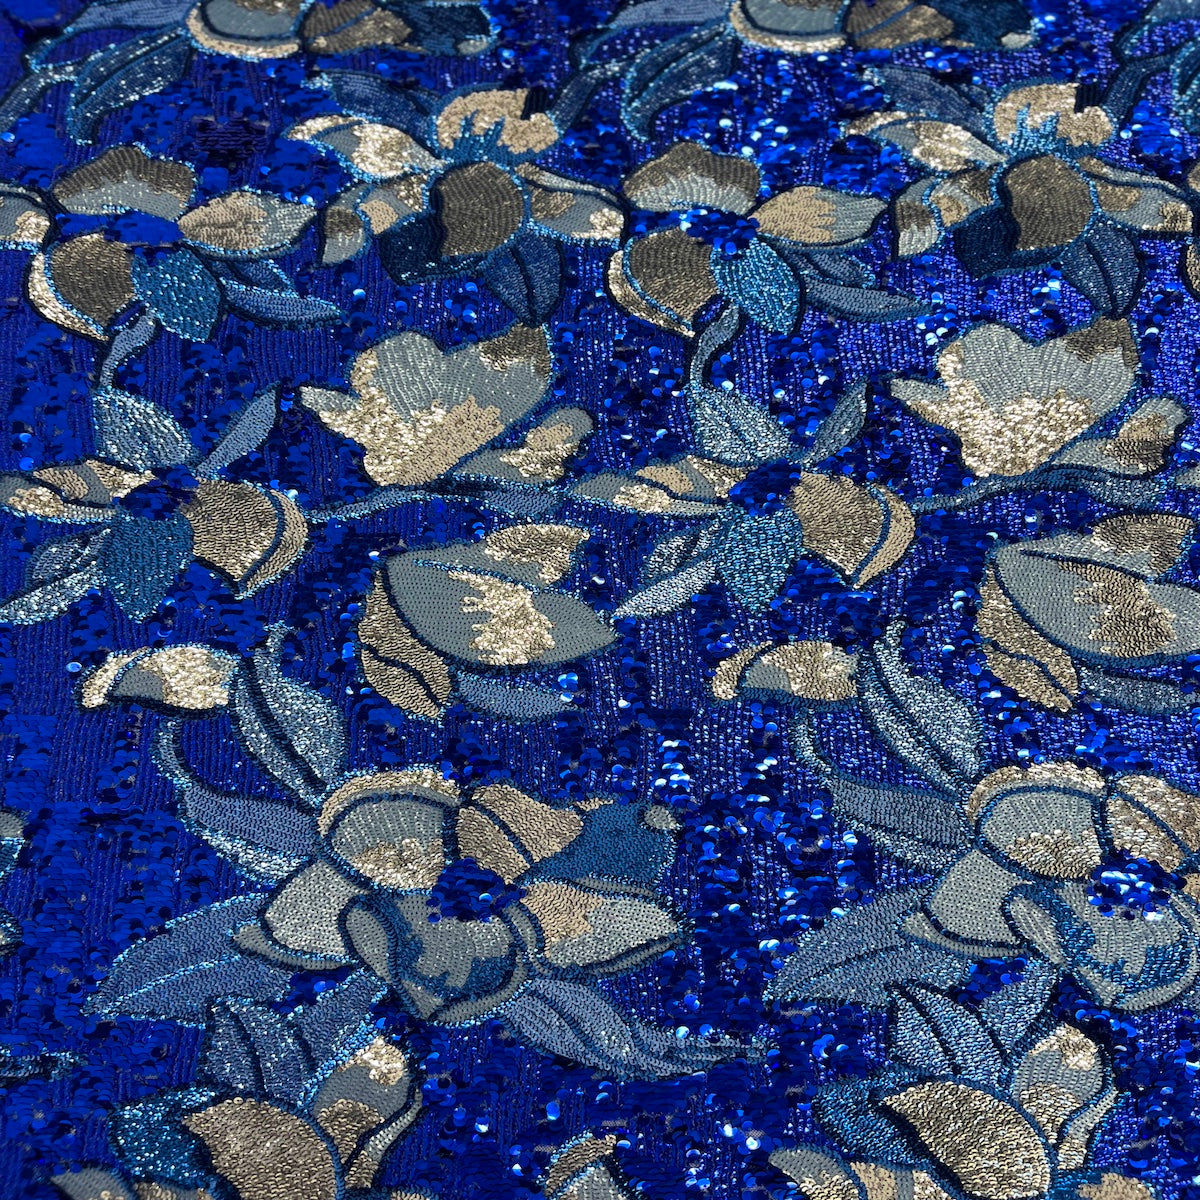 Tela de lentejuelas florales multicolor Giselle azul real